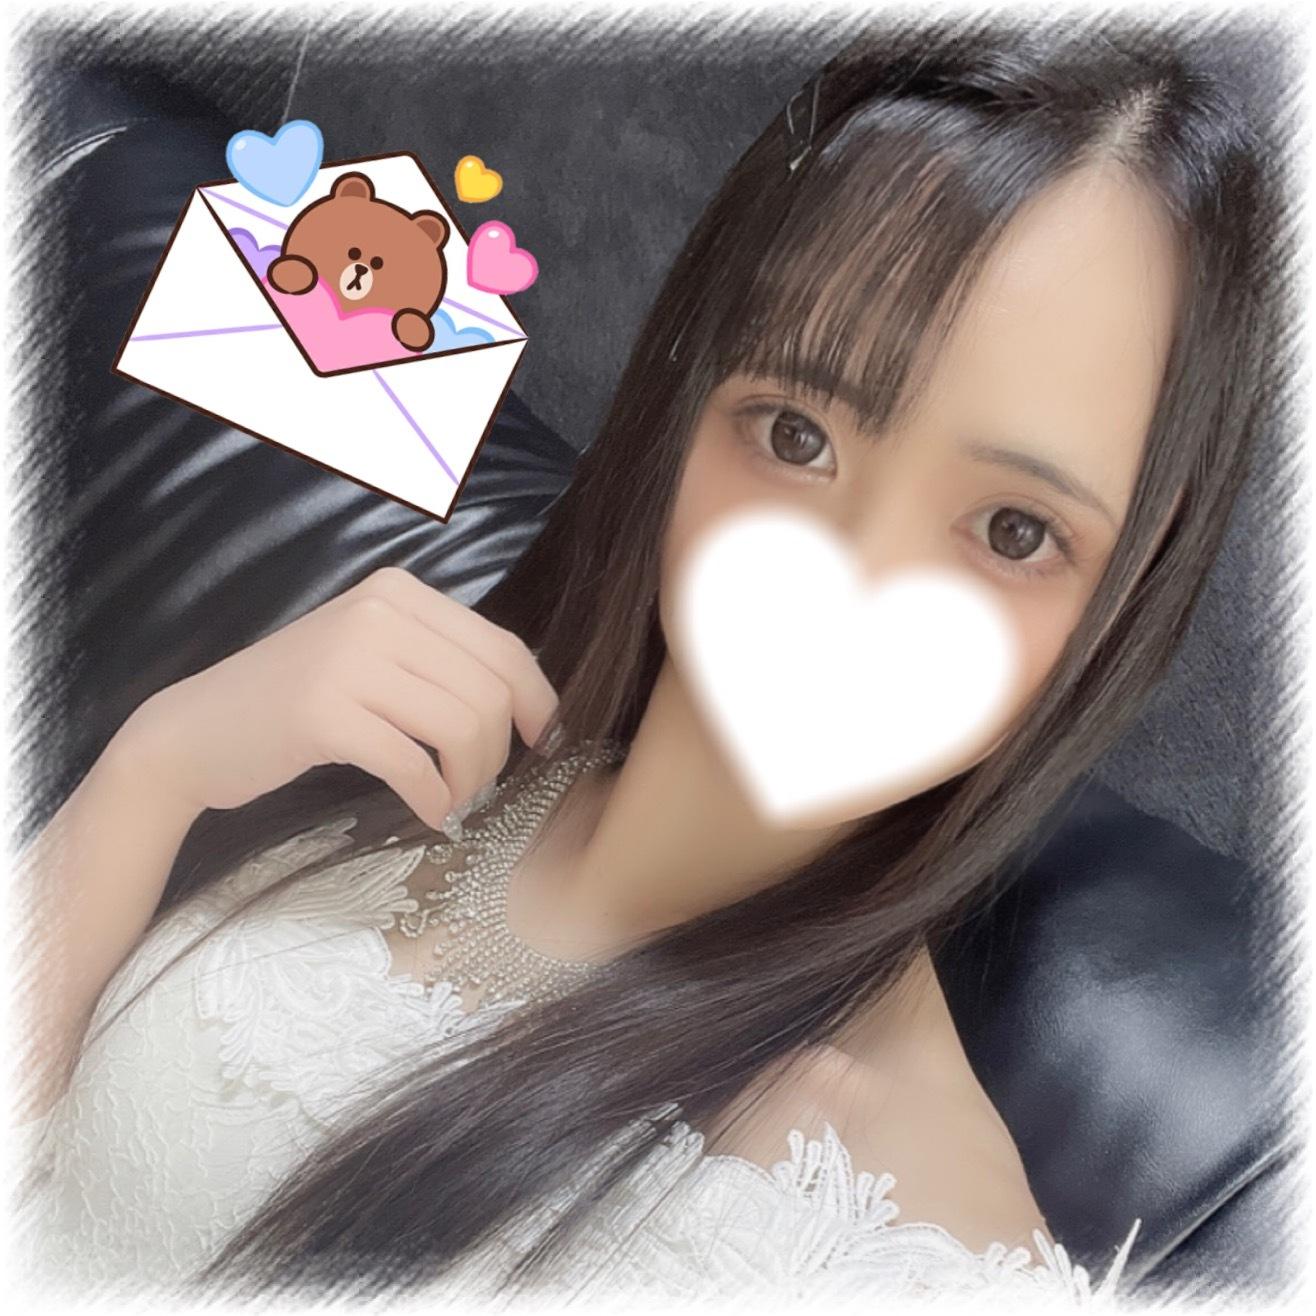 〜 𓂃𓈒𓏸︎︎︎︎<img class="emojione" alt="💌" title=":love_letter:" src="https://fuzoku.jp/assets/img/emojione/1f48c.png"/> 〜